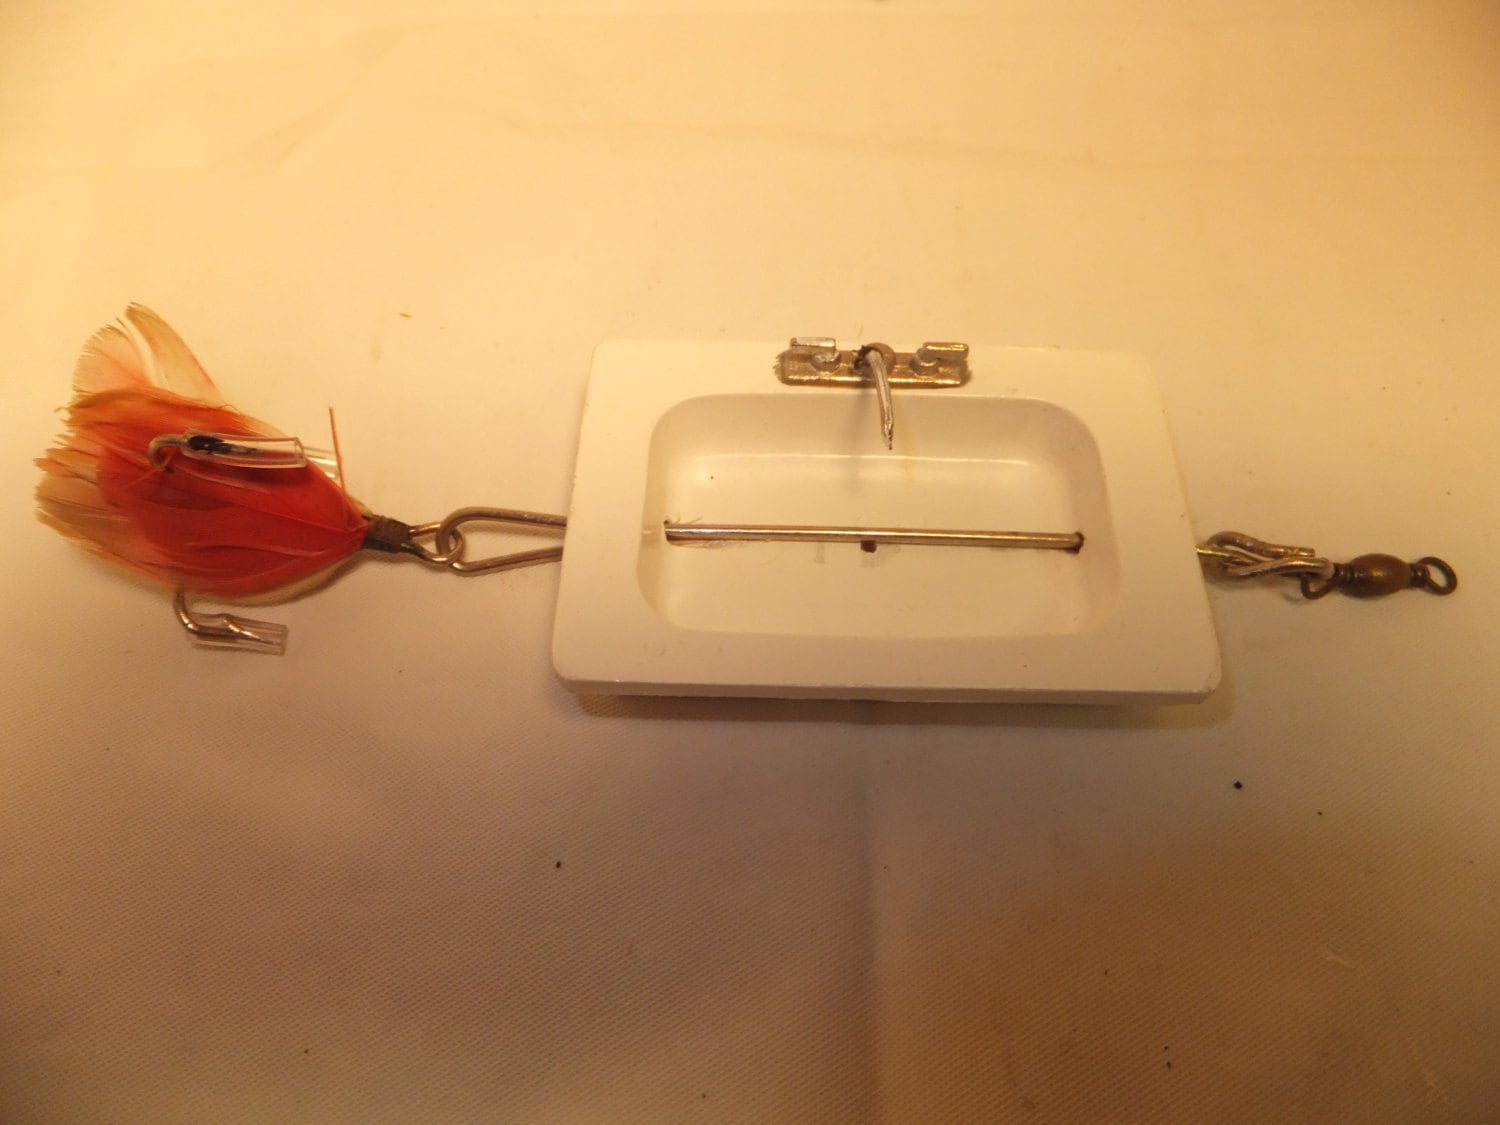 kitchen sink fishing lure